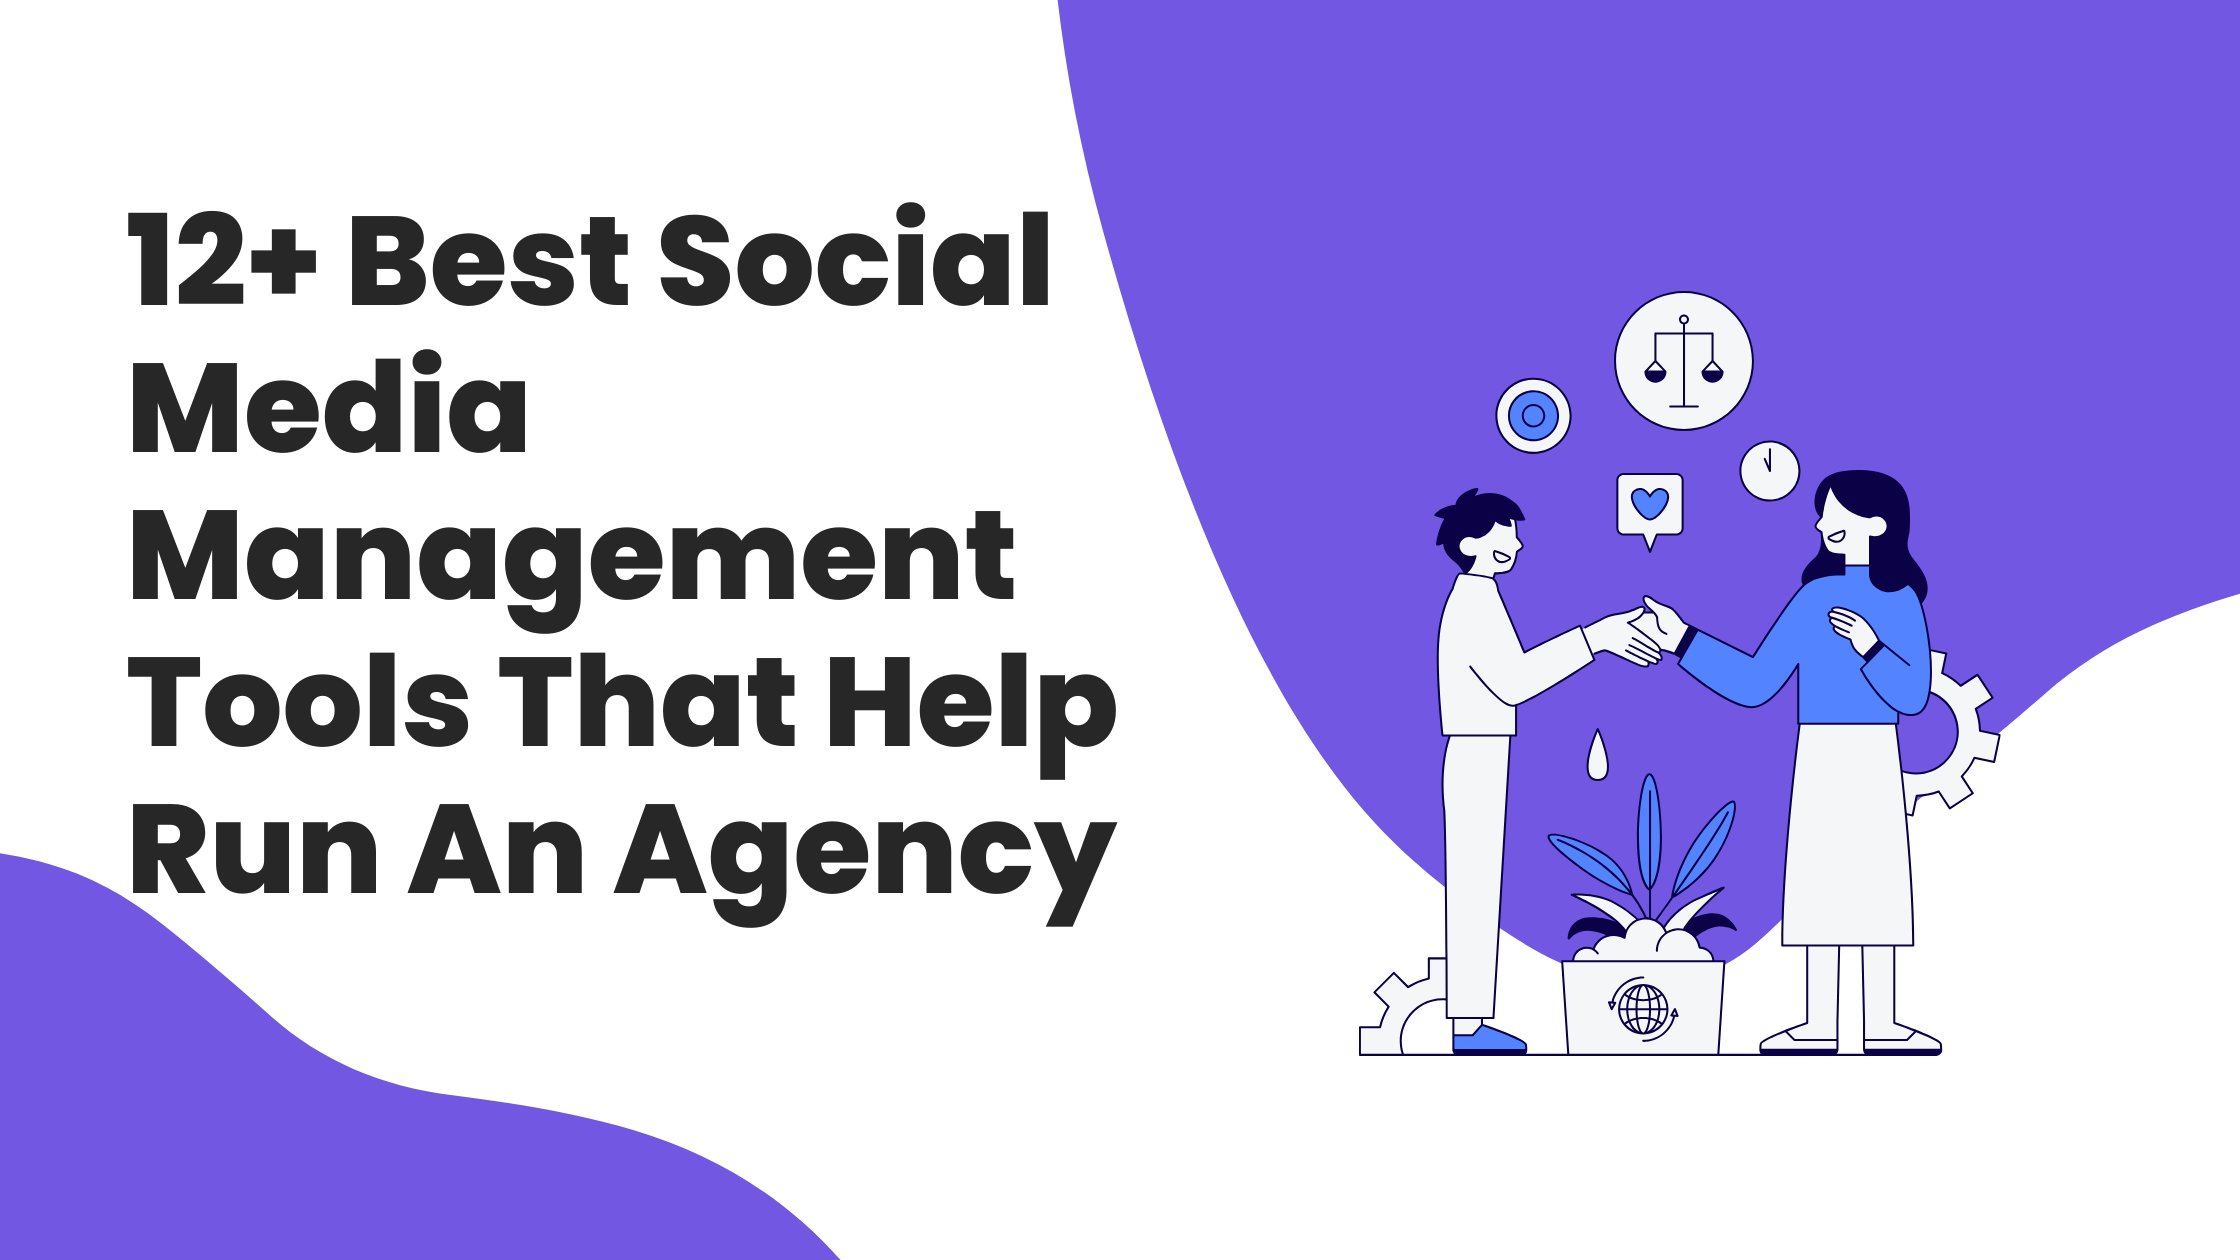 12+ Best Social Media Management Tools That Help Run An Agency